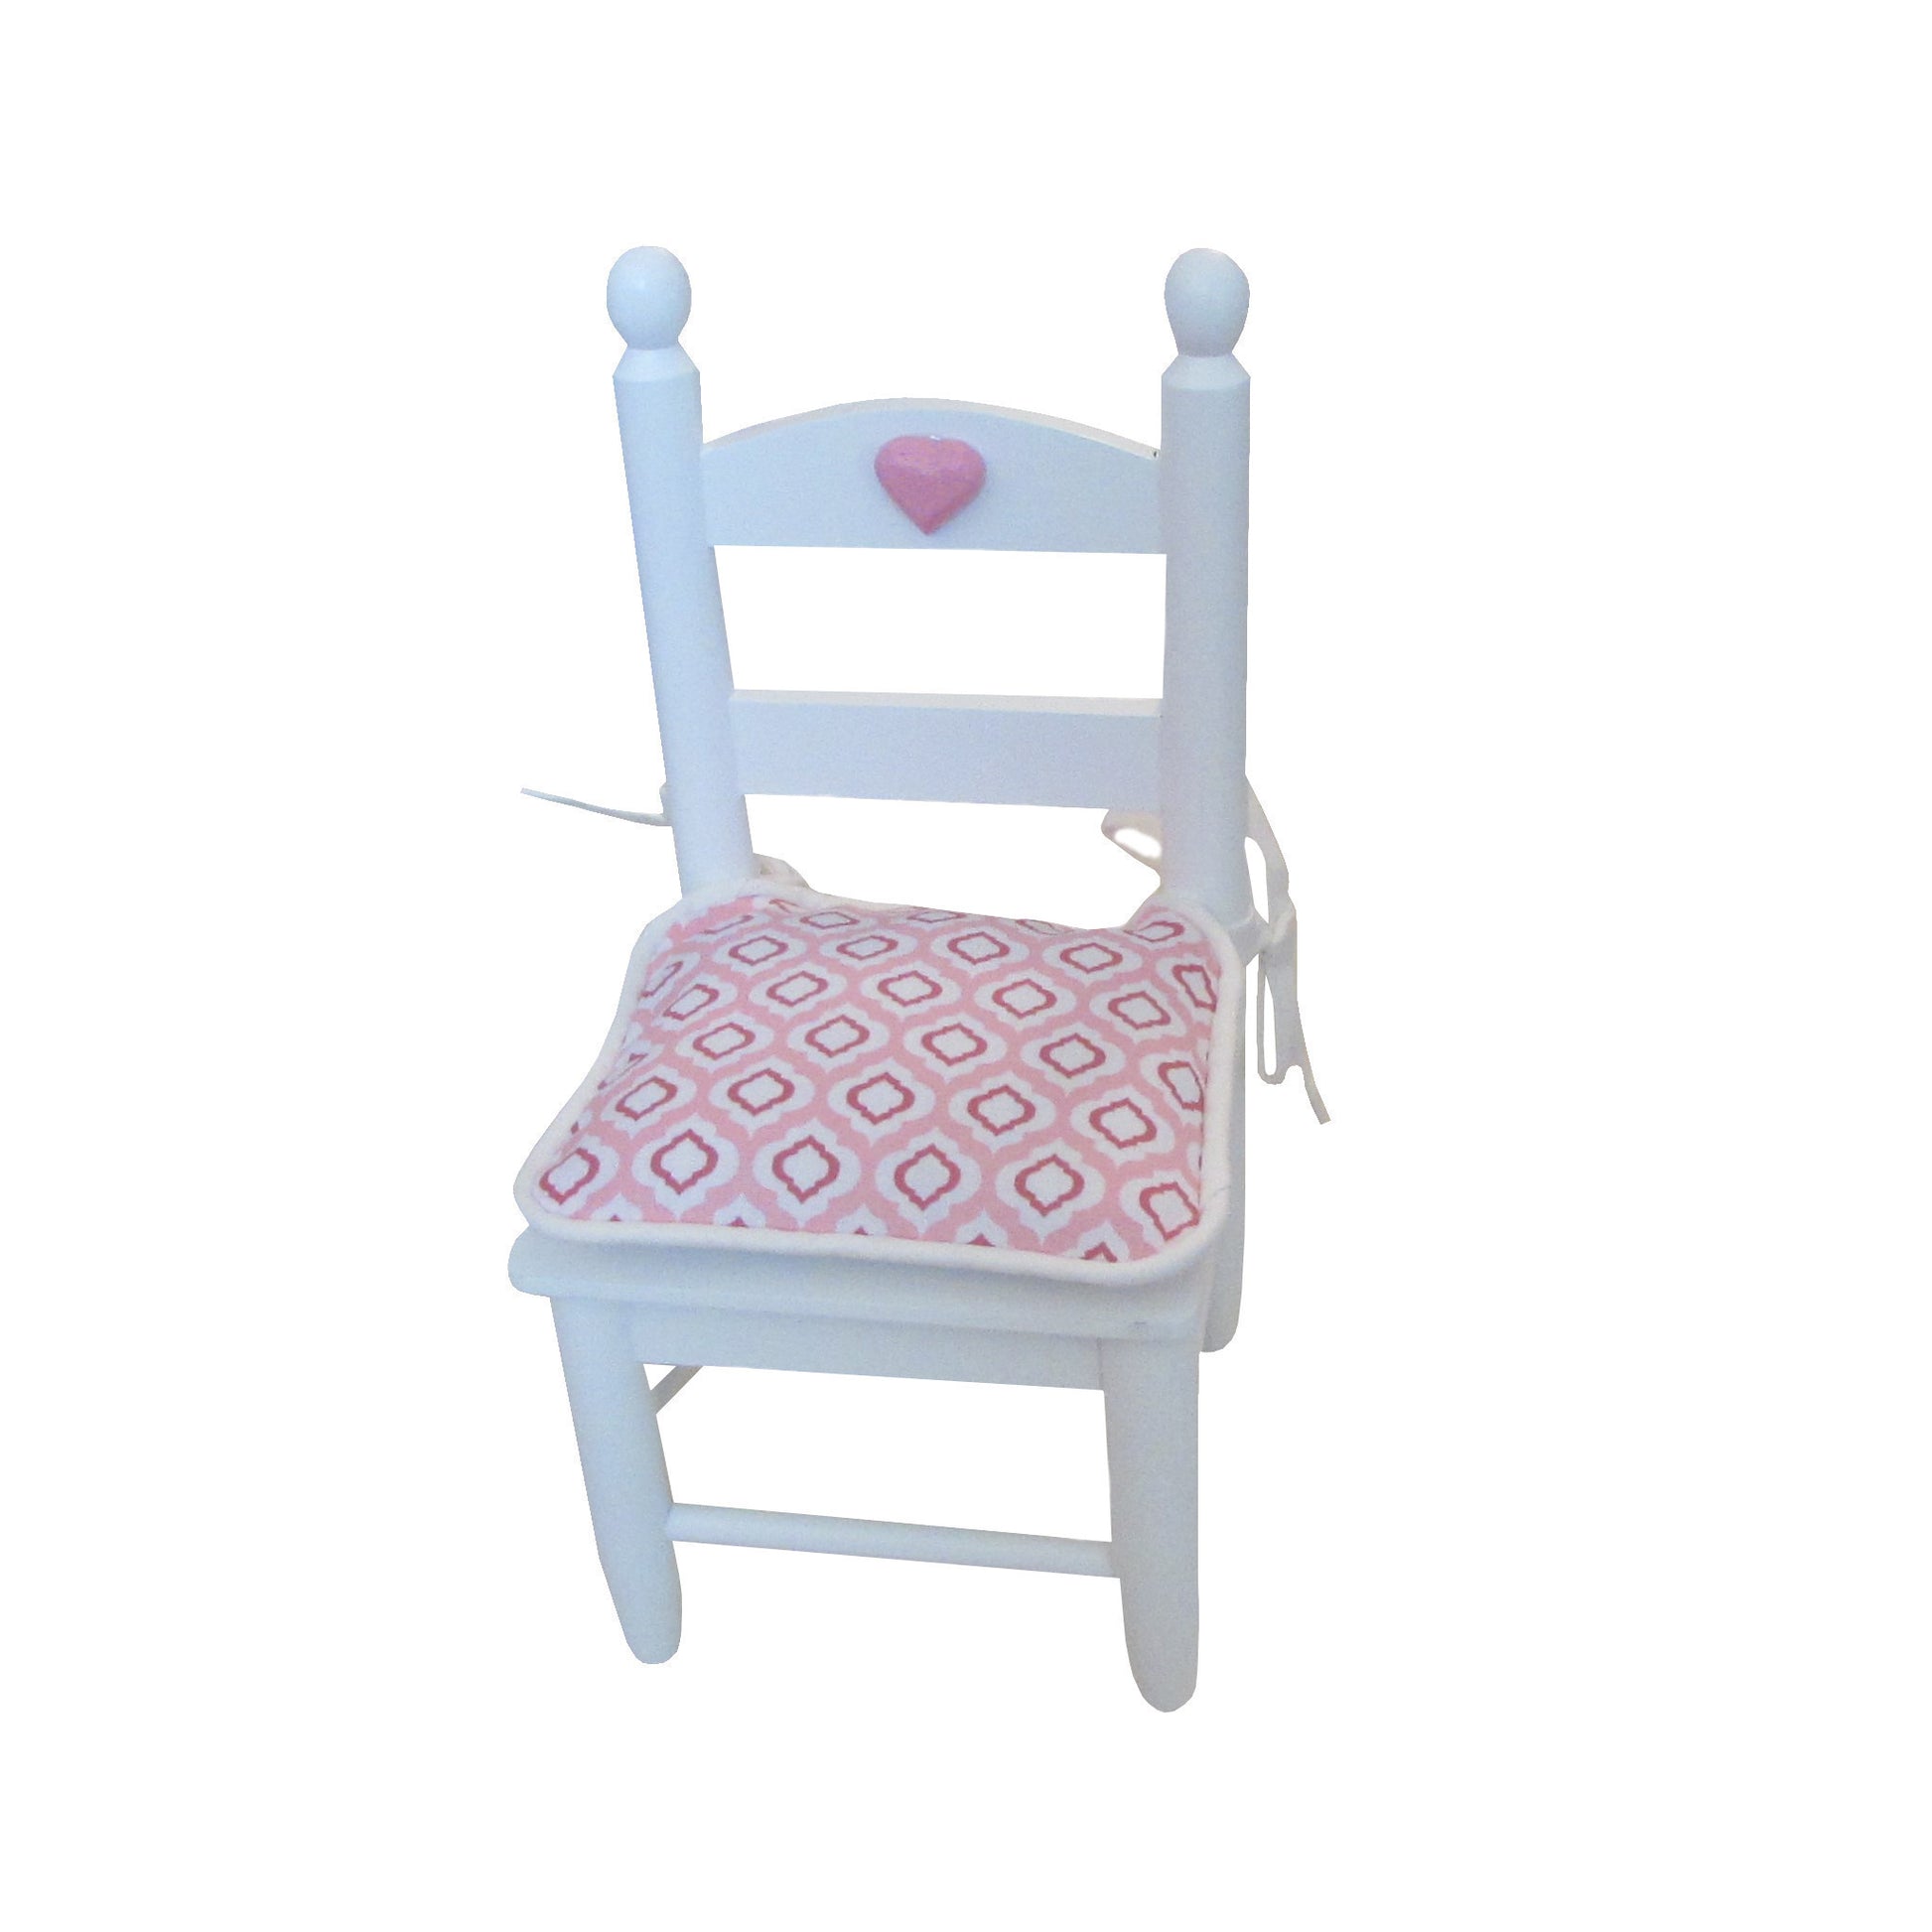 Pink Print Doll Chair Cushion for 18-inch dolls